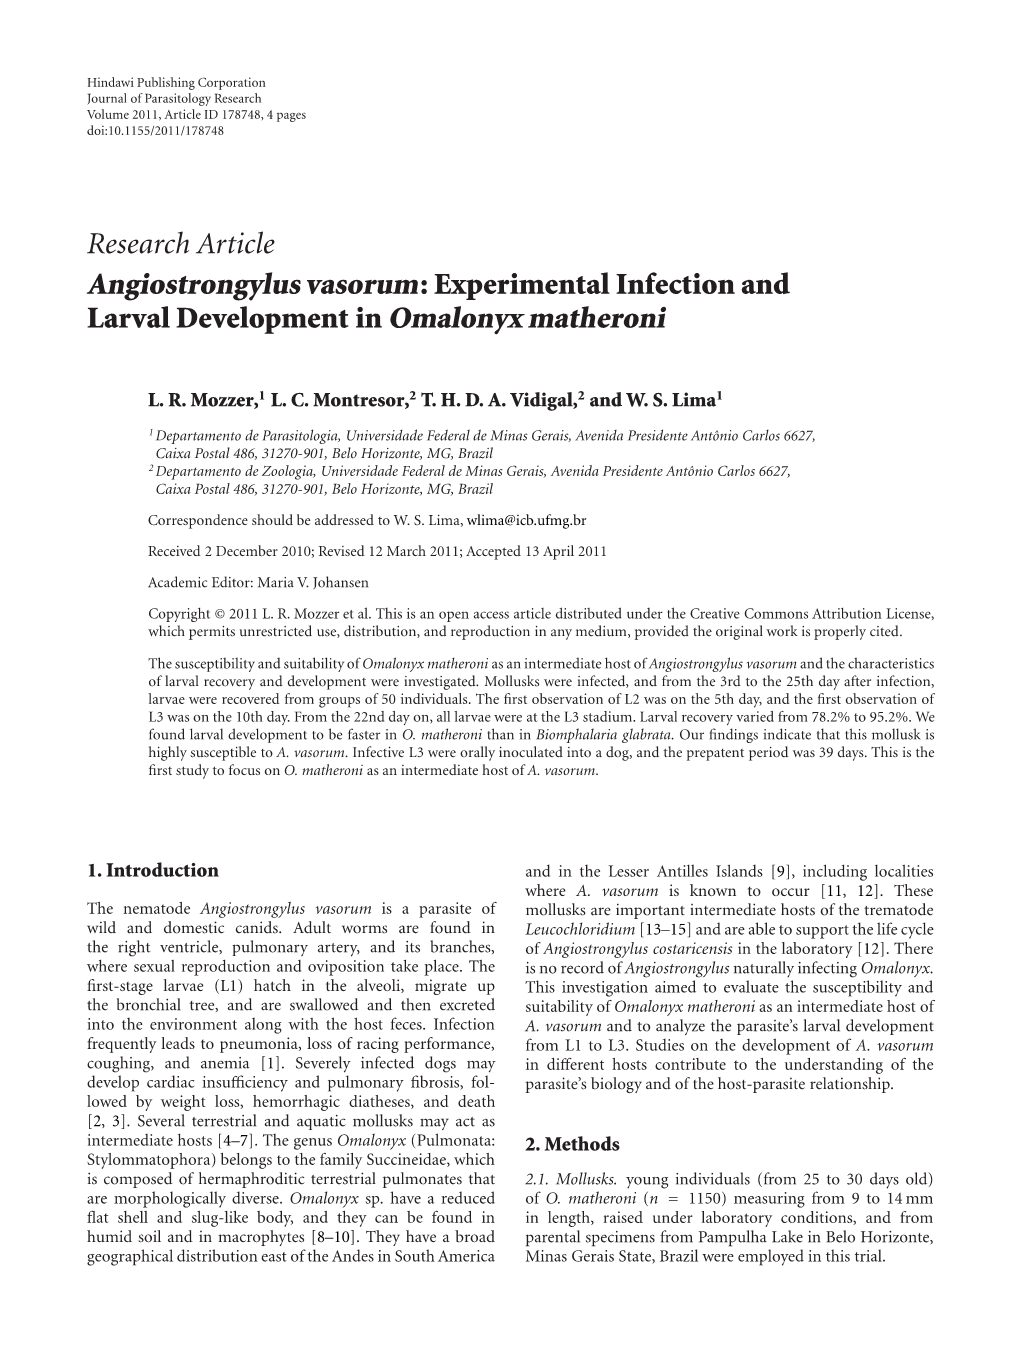 Angiostrongylus Vasorum: Experimental Infection and Larval Development in Omalonyx Matheroni